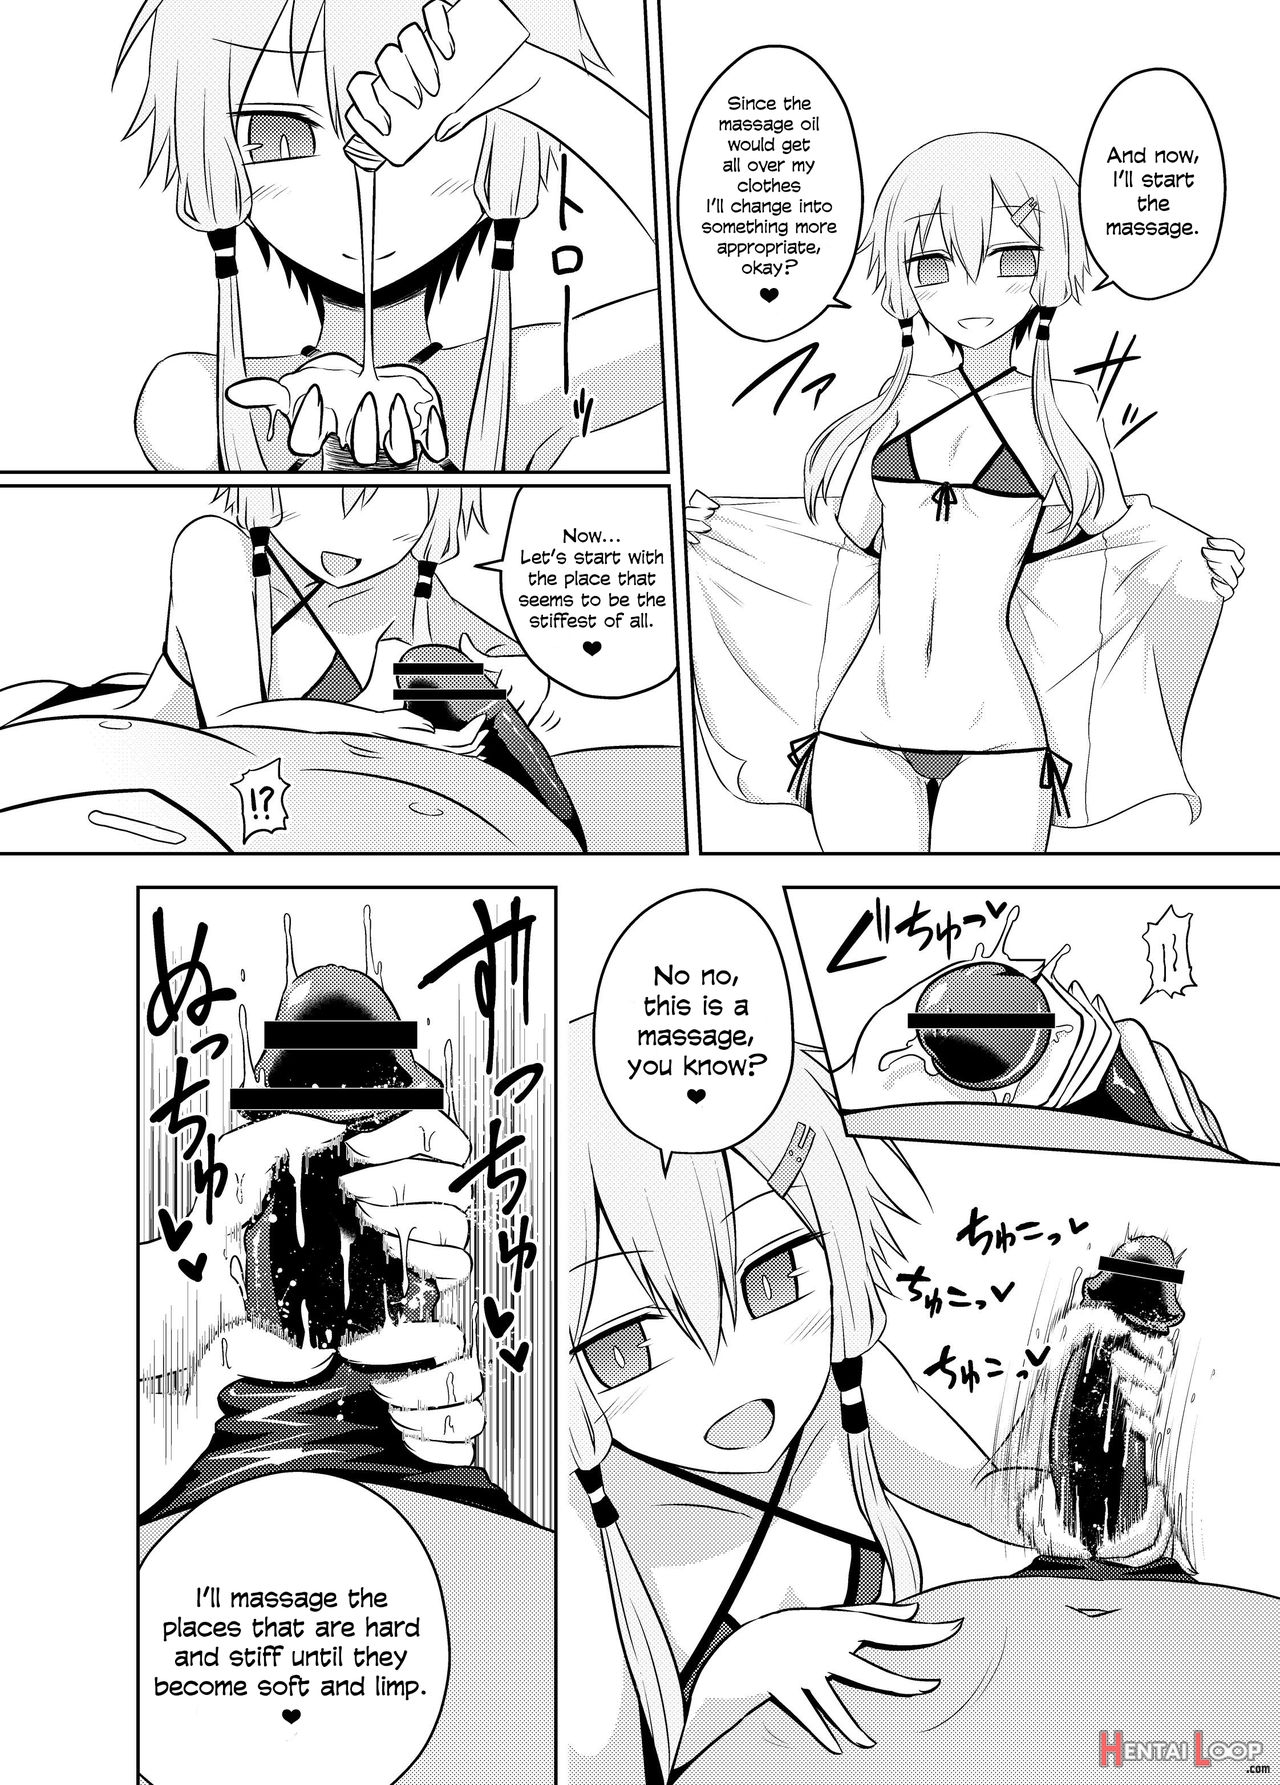 Yukari-san Seems To Be Continuing Her Body Washing Service! page 10